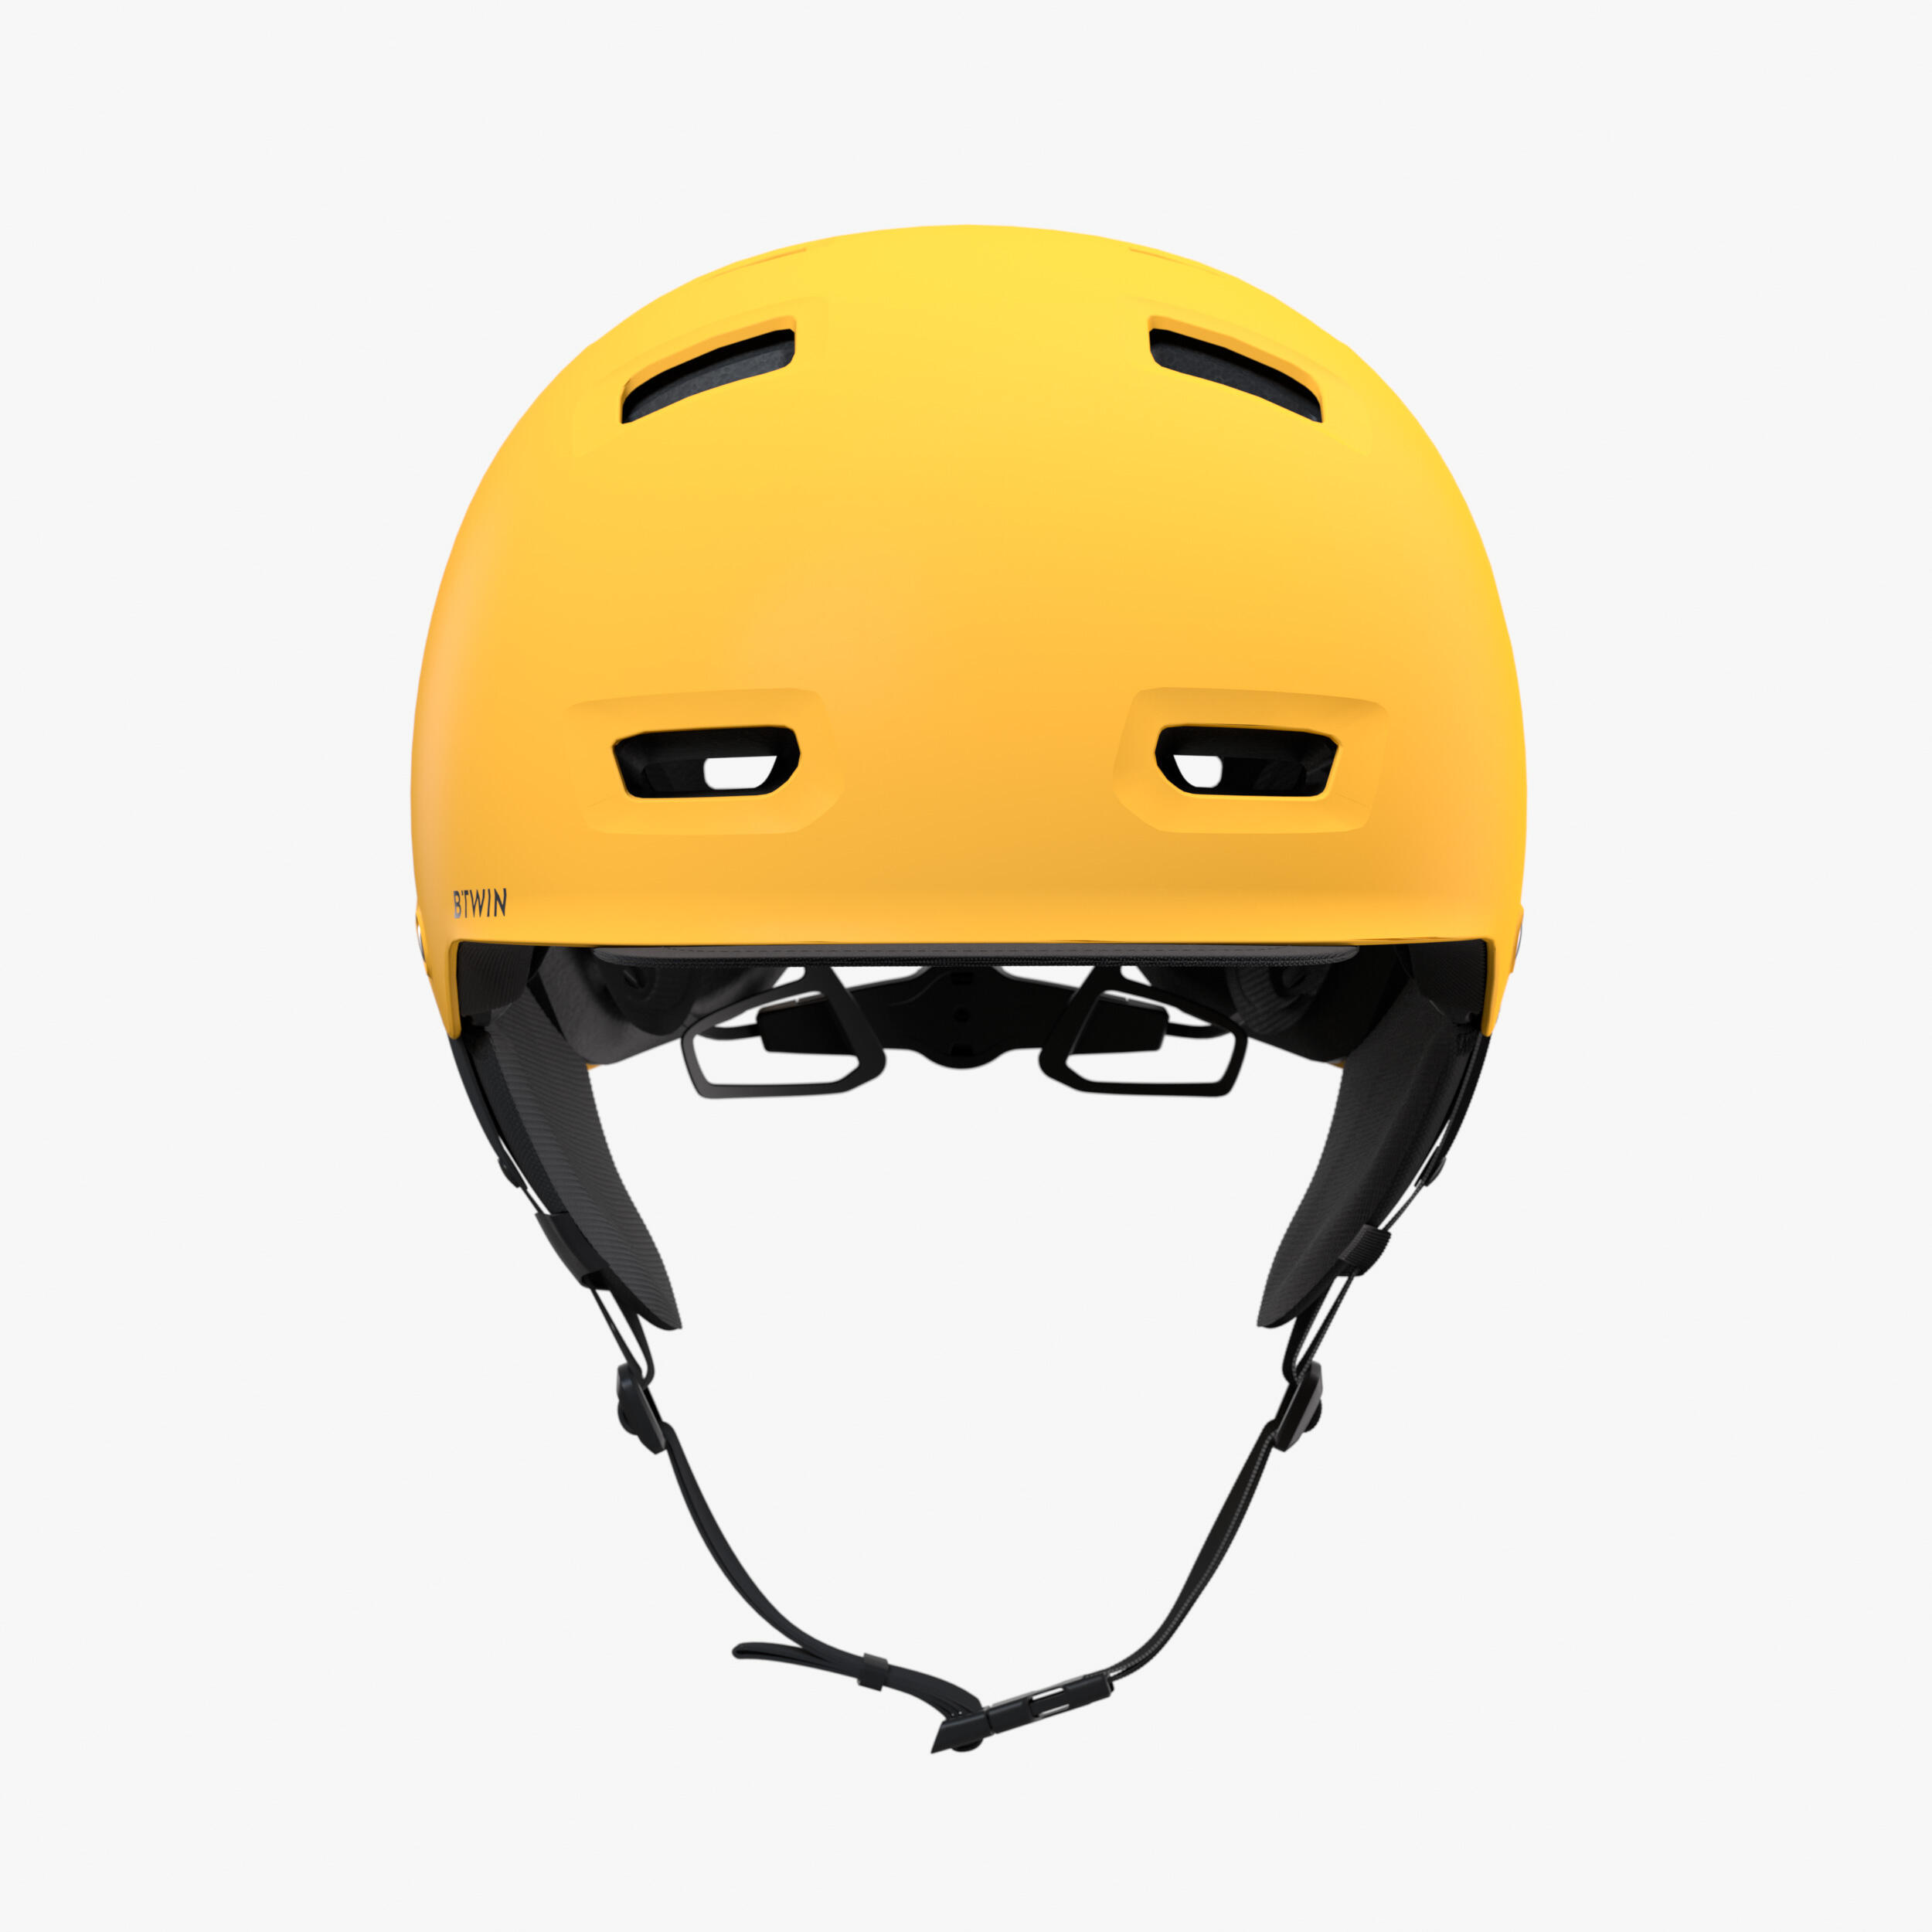 City Cycling Bowl Helmet - Yellow 8/9